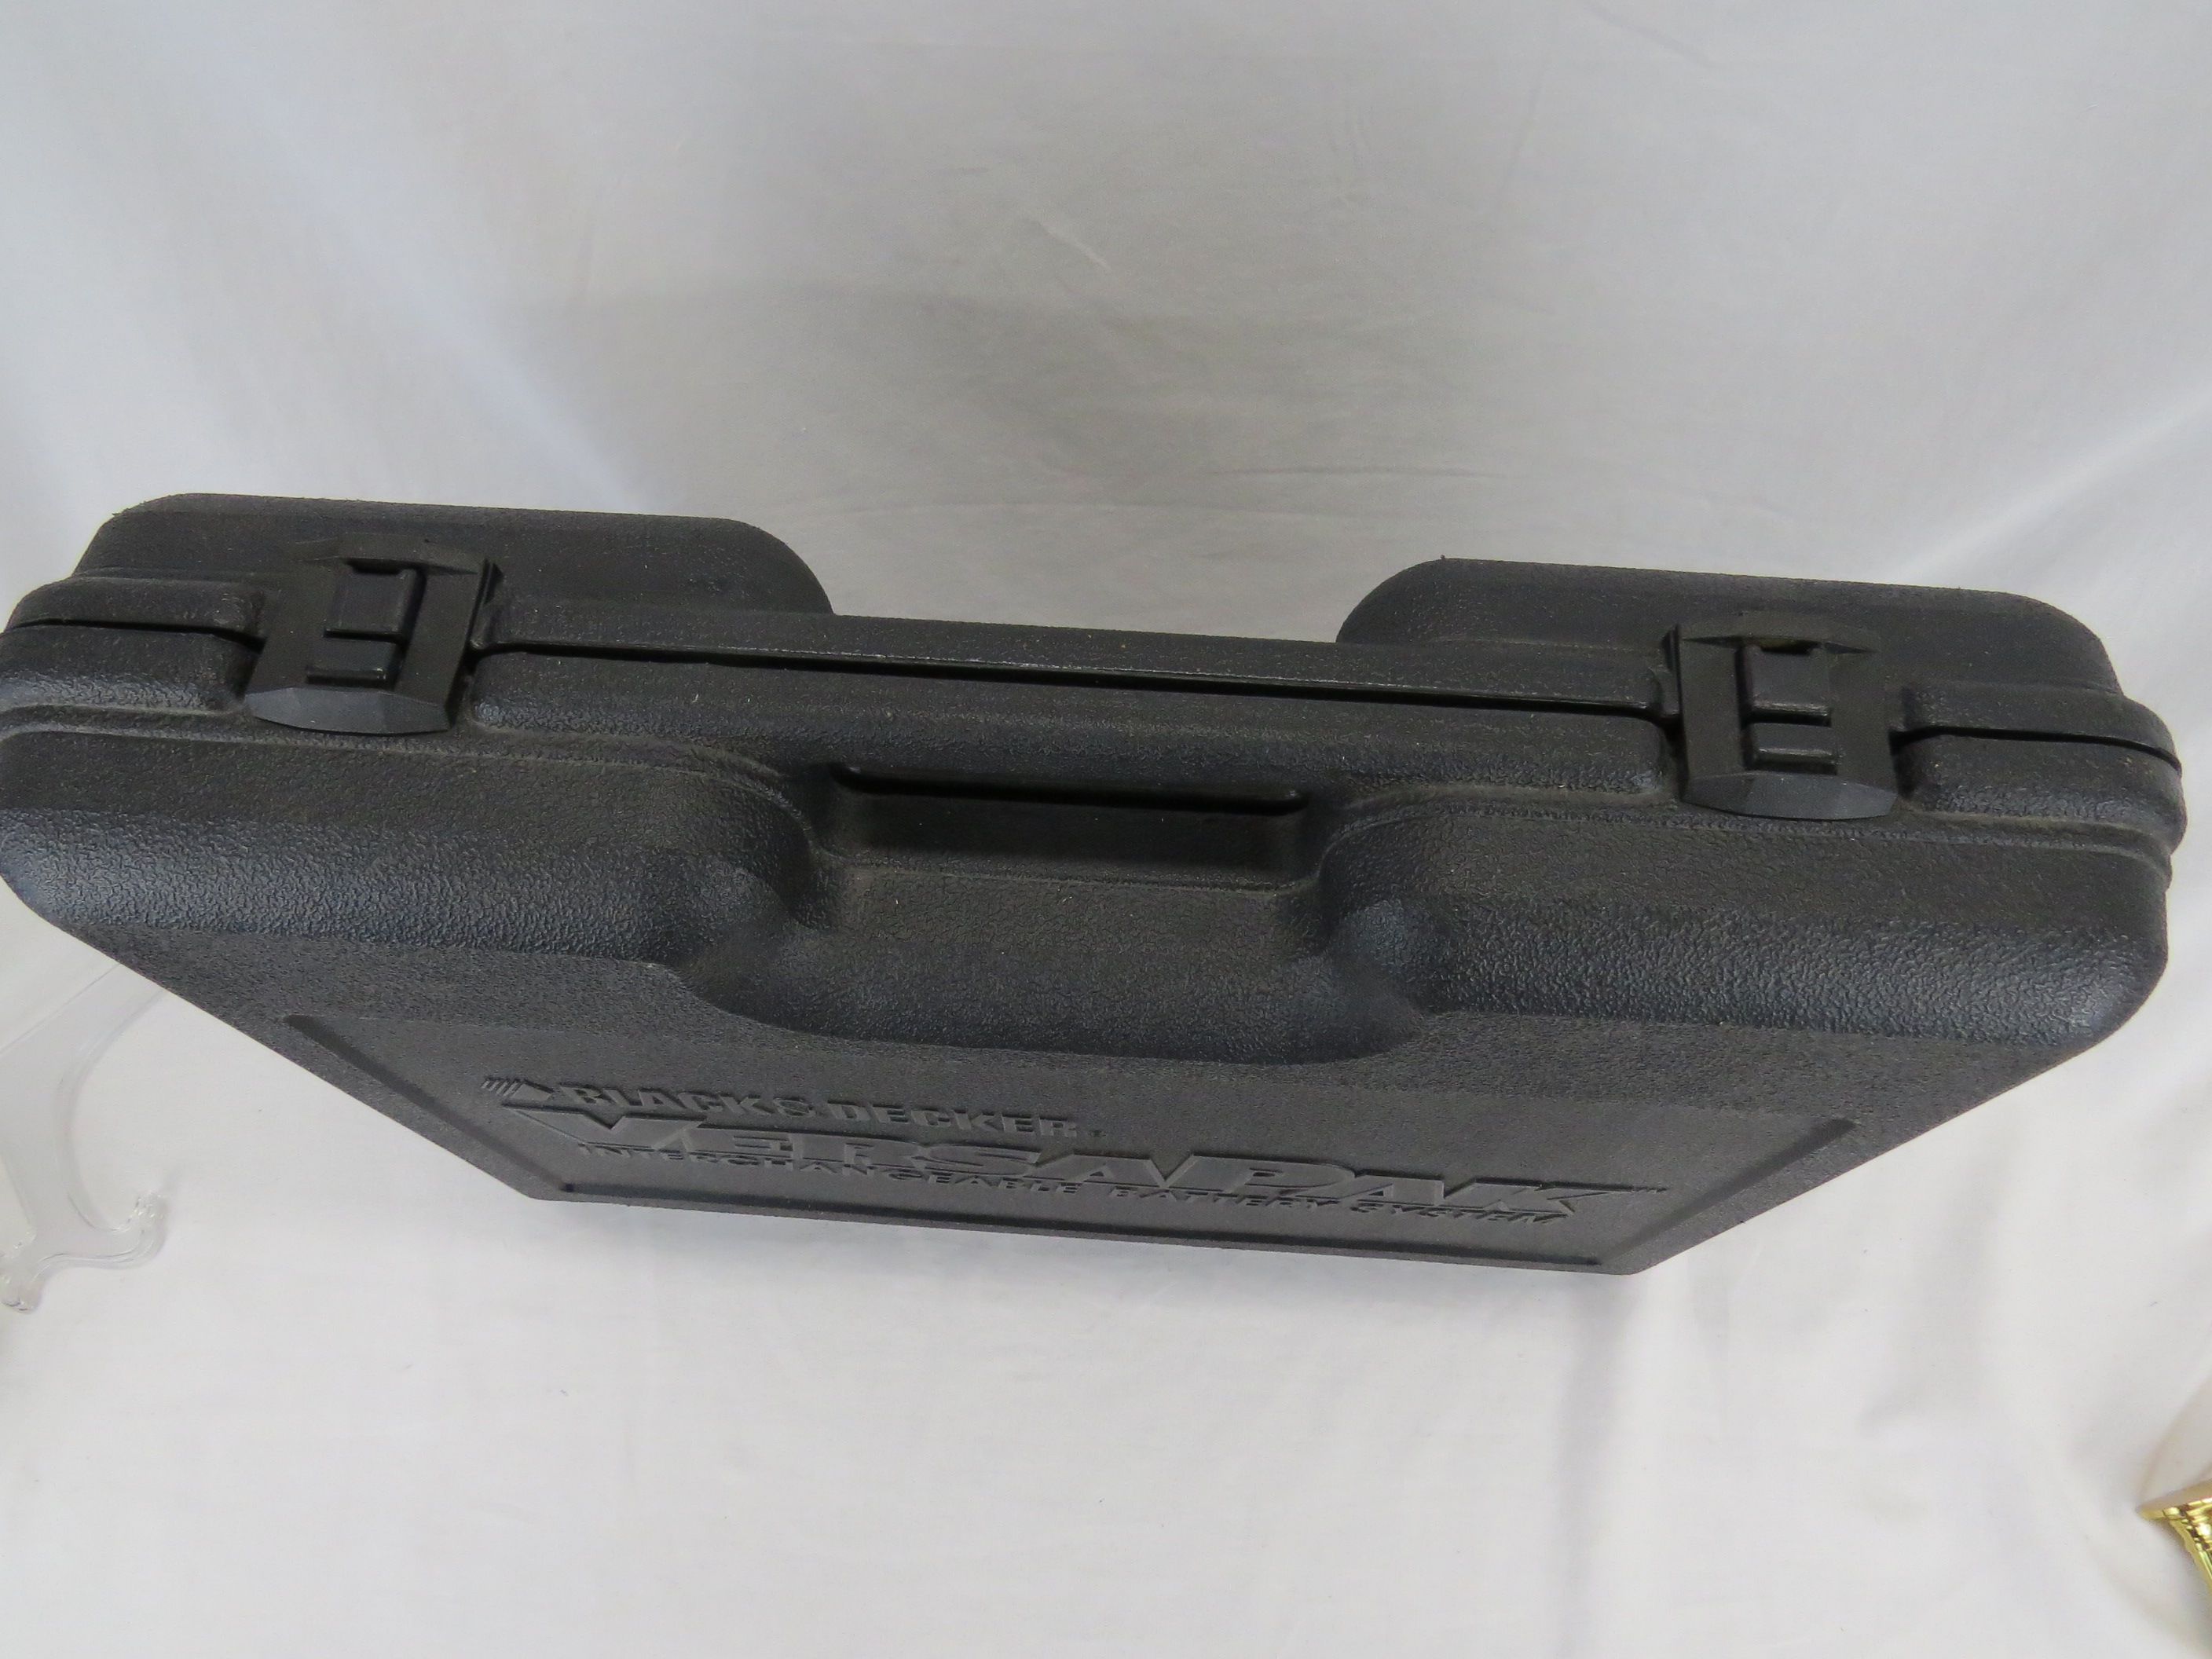 Black & Decker Versapak Battery 4-Tool Set in Case - Bunting Online Auctions